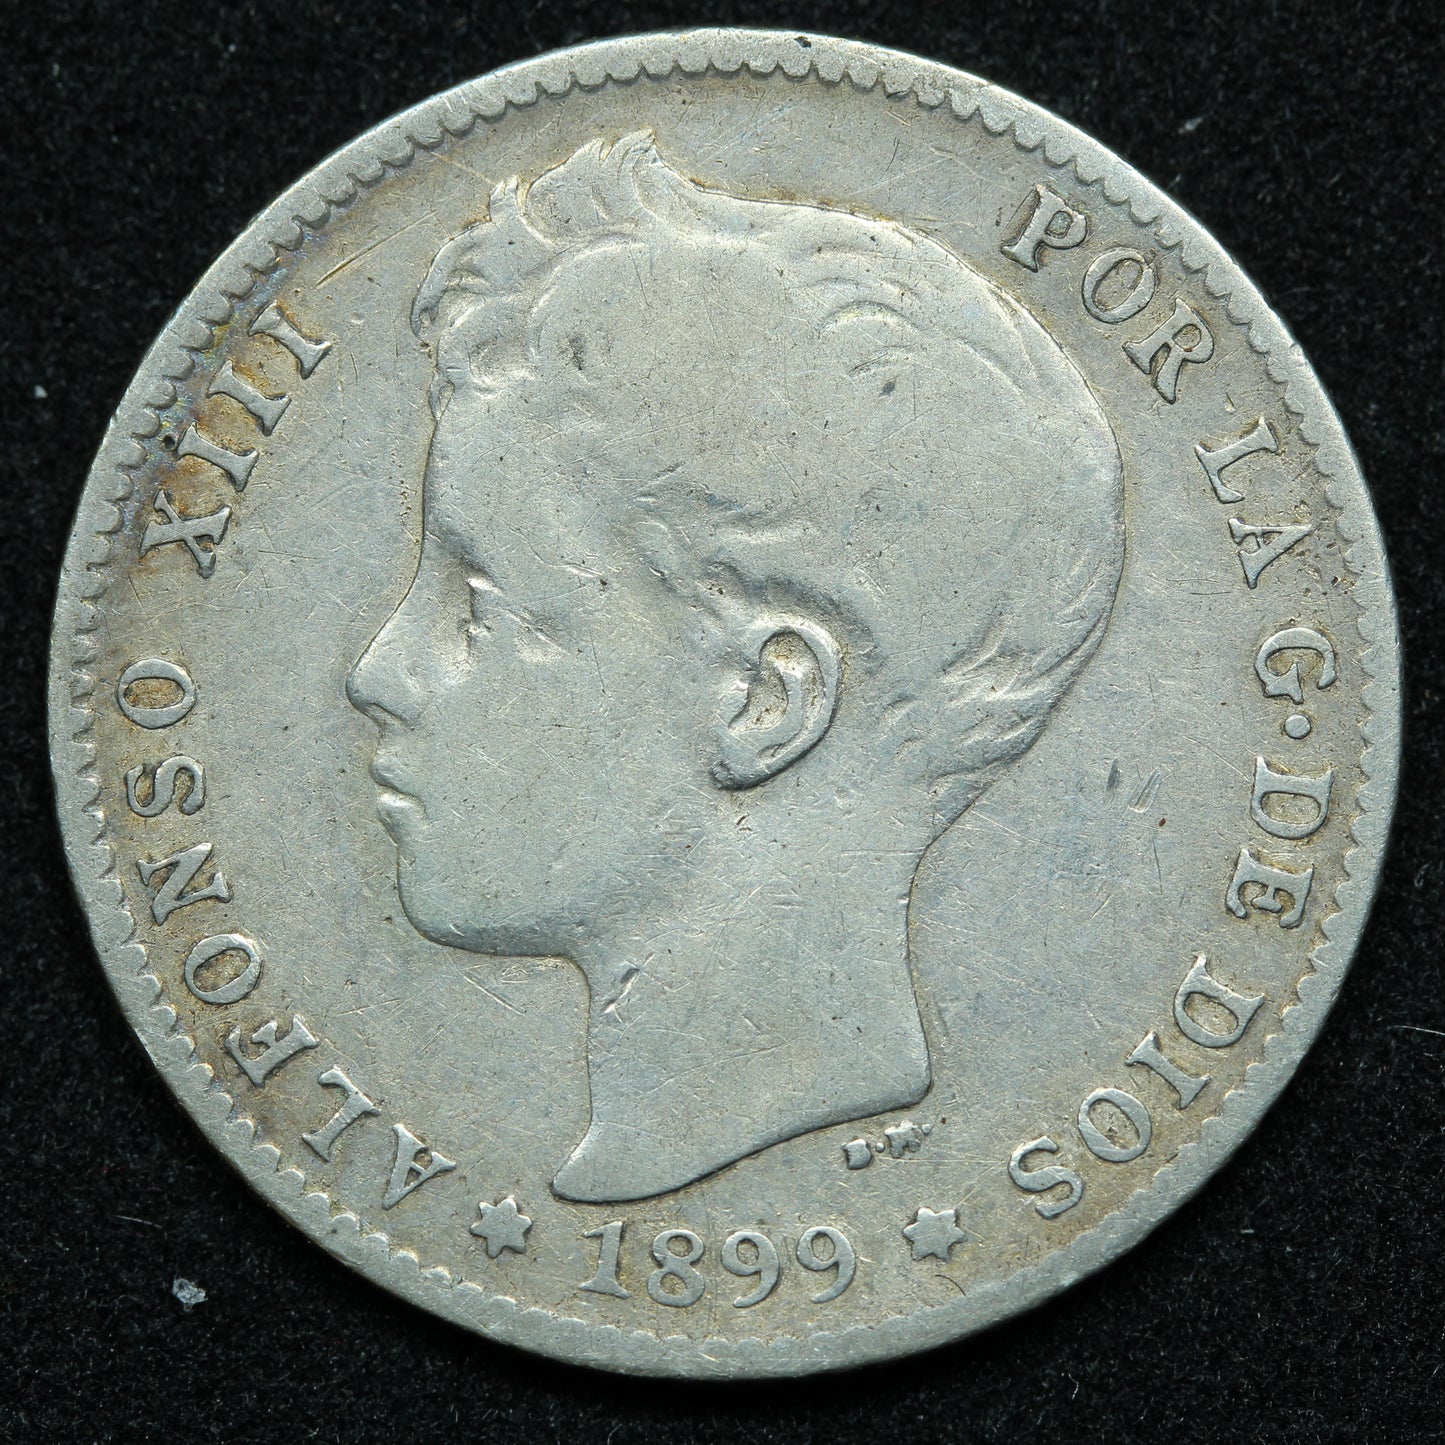 1899 Una Peseta Spain Silver Coin - ALFONSO XIII - KM# 706